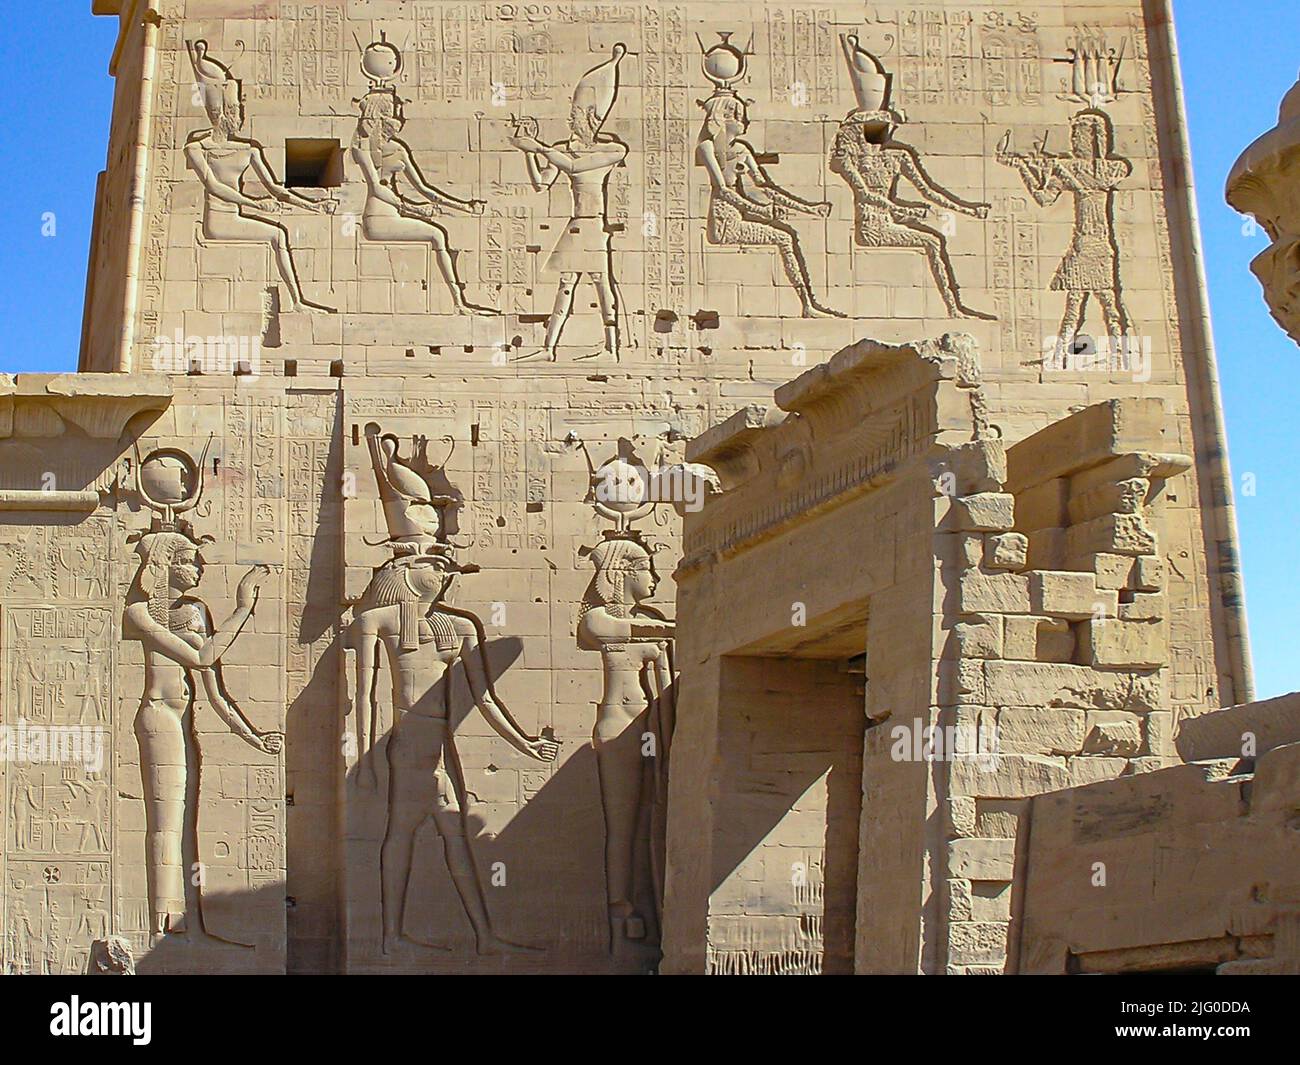 Philae Temple on the Agilkia island, dedicated to god Osiris, Egypt, Africa - front view Stock Photo